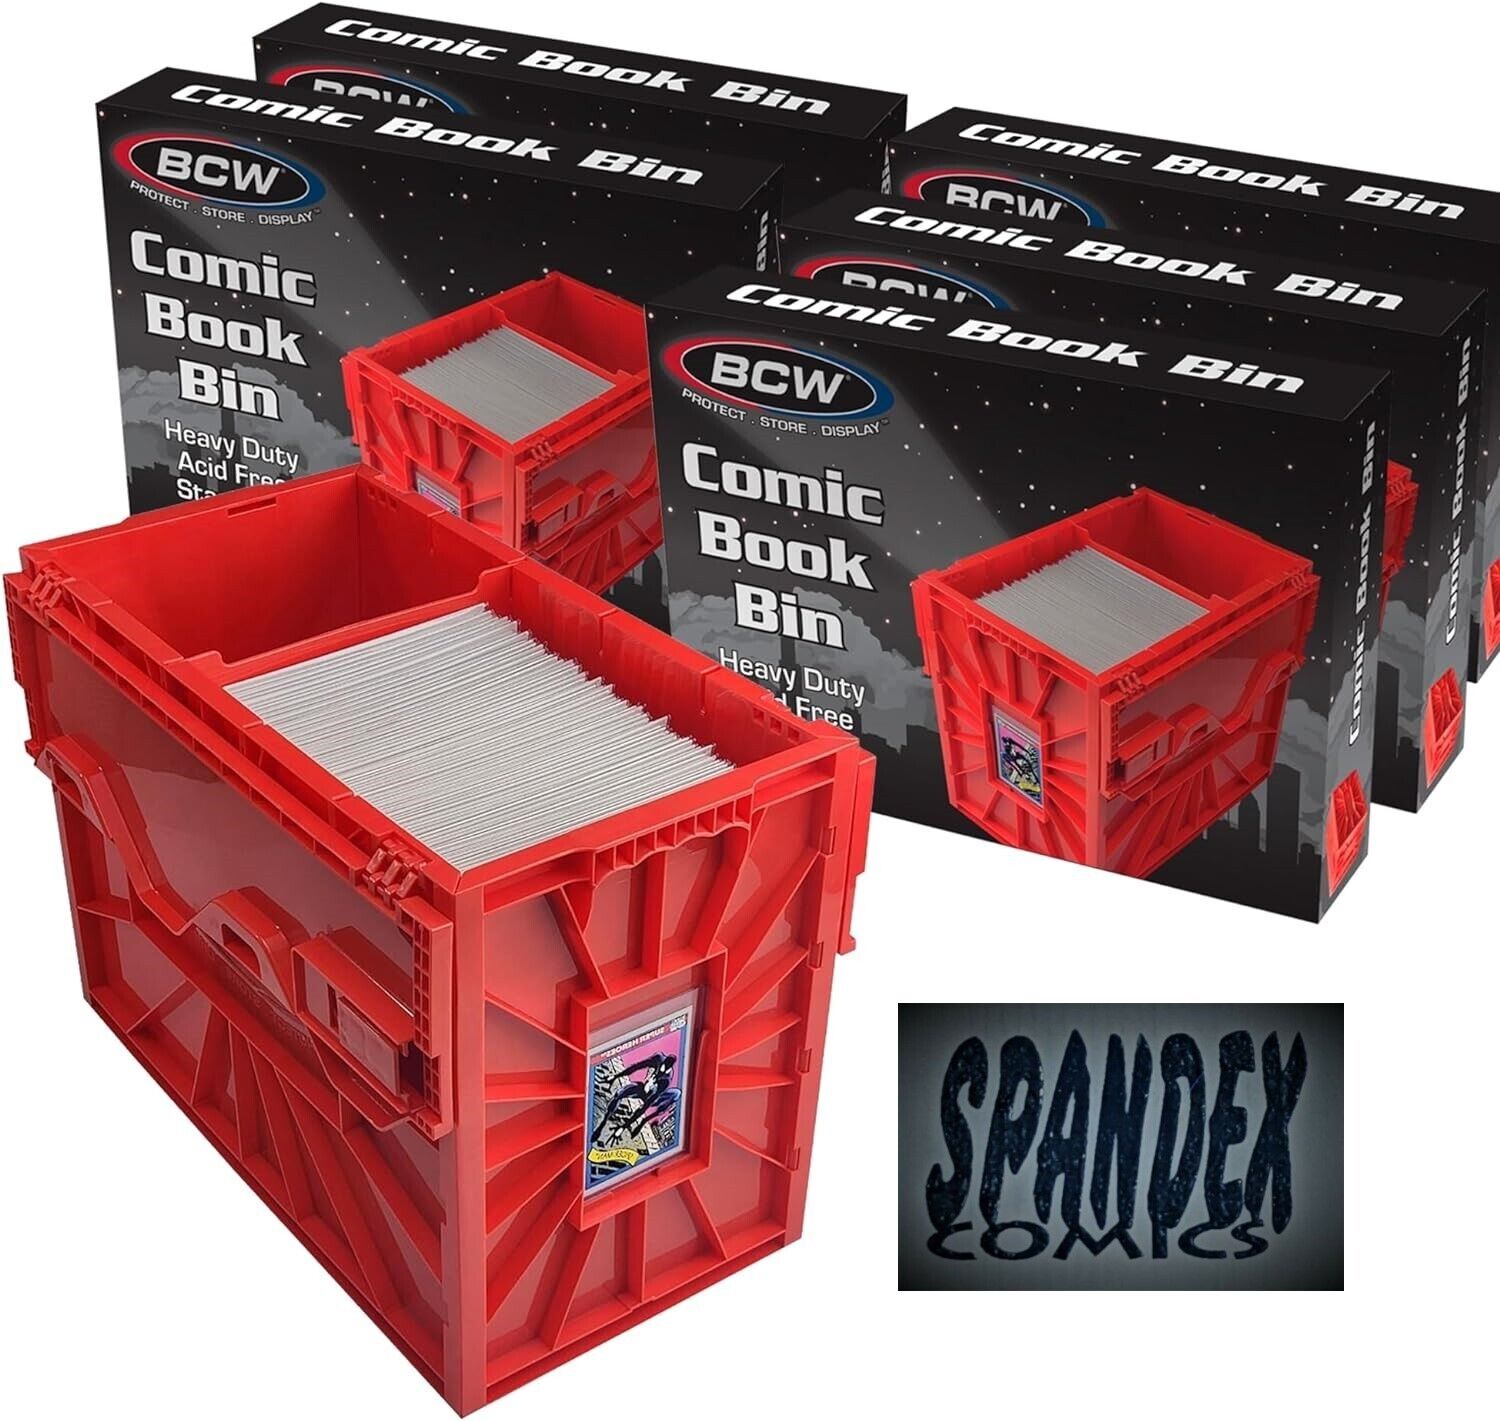 1 Case (5) BCW Red Short Comic Book Box Bin | Heavy Duty Acid Free Plastic Stack